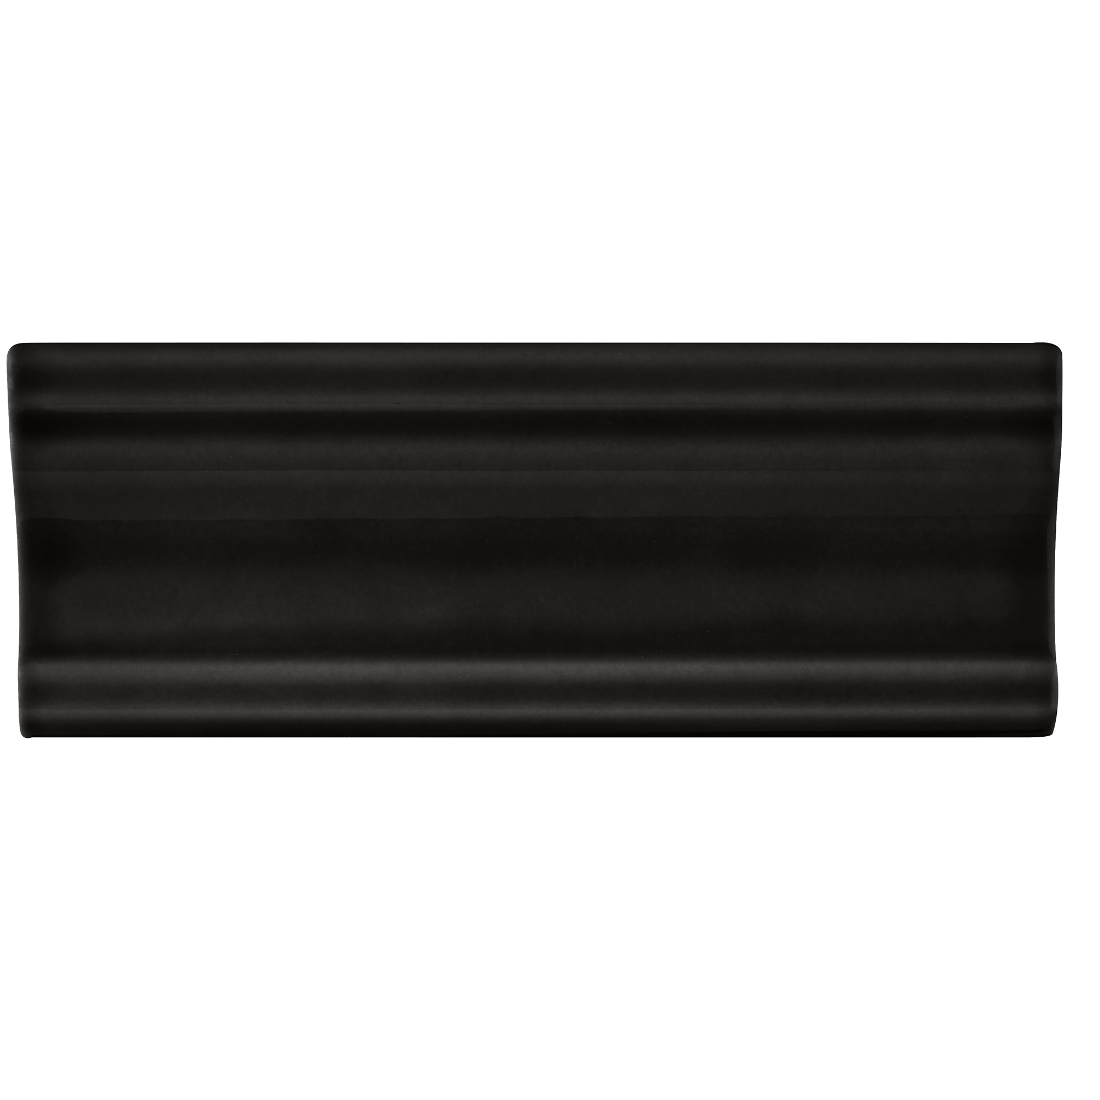 Imperial Black Matte (069) Cornice 20cm